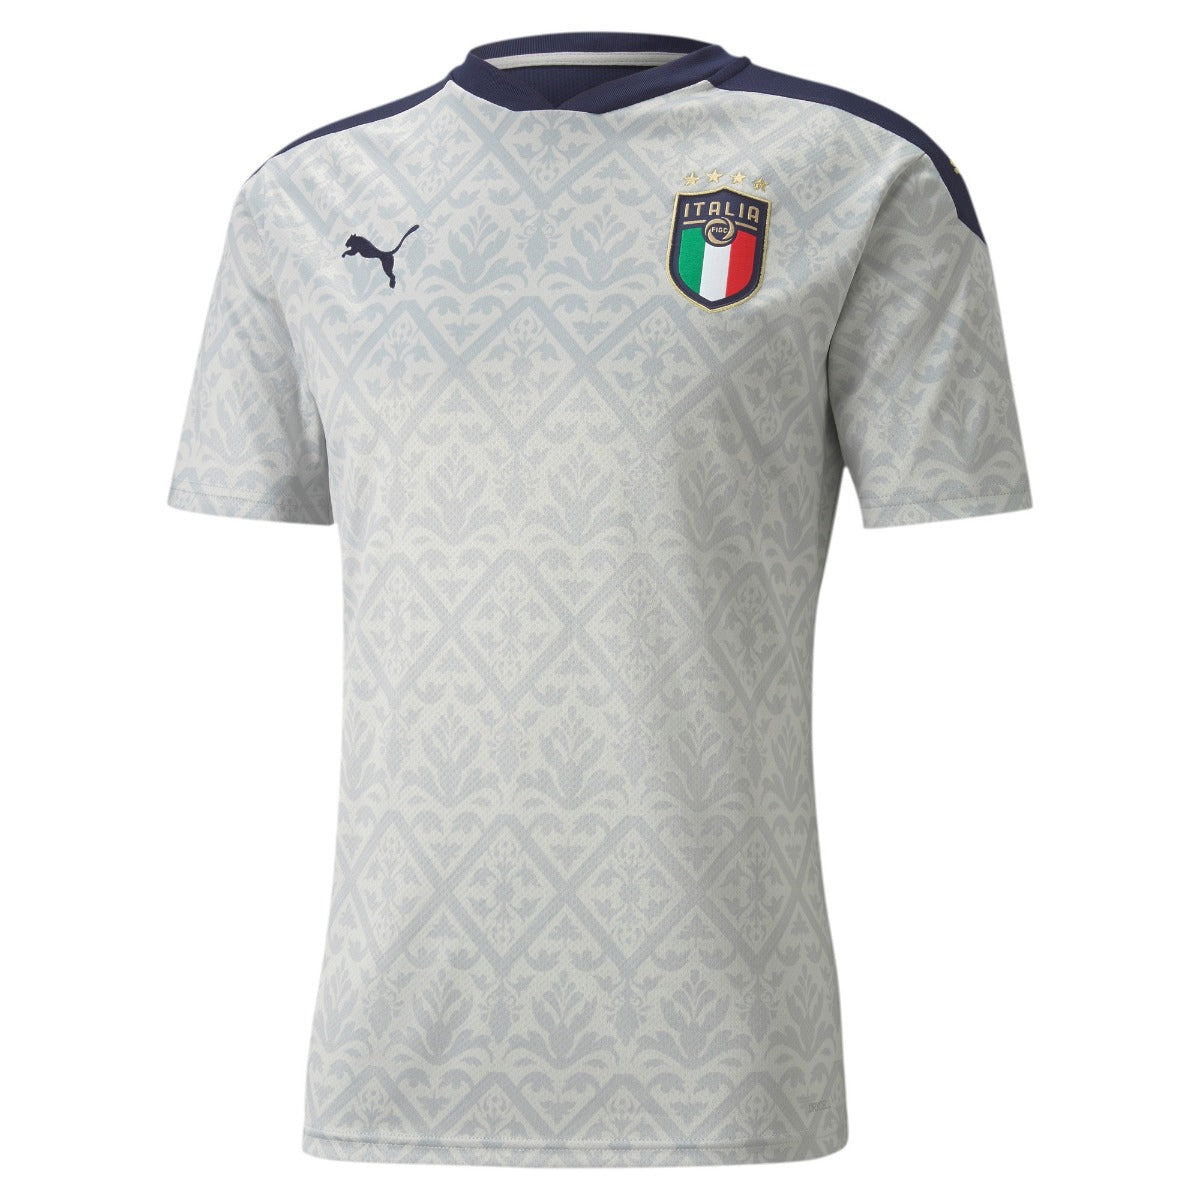 Puma 2021 Italy Goalkeeper Jersey - Gray (Front)